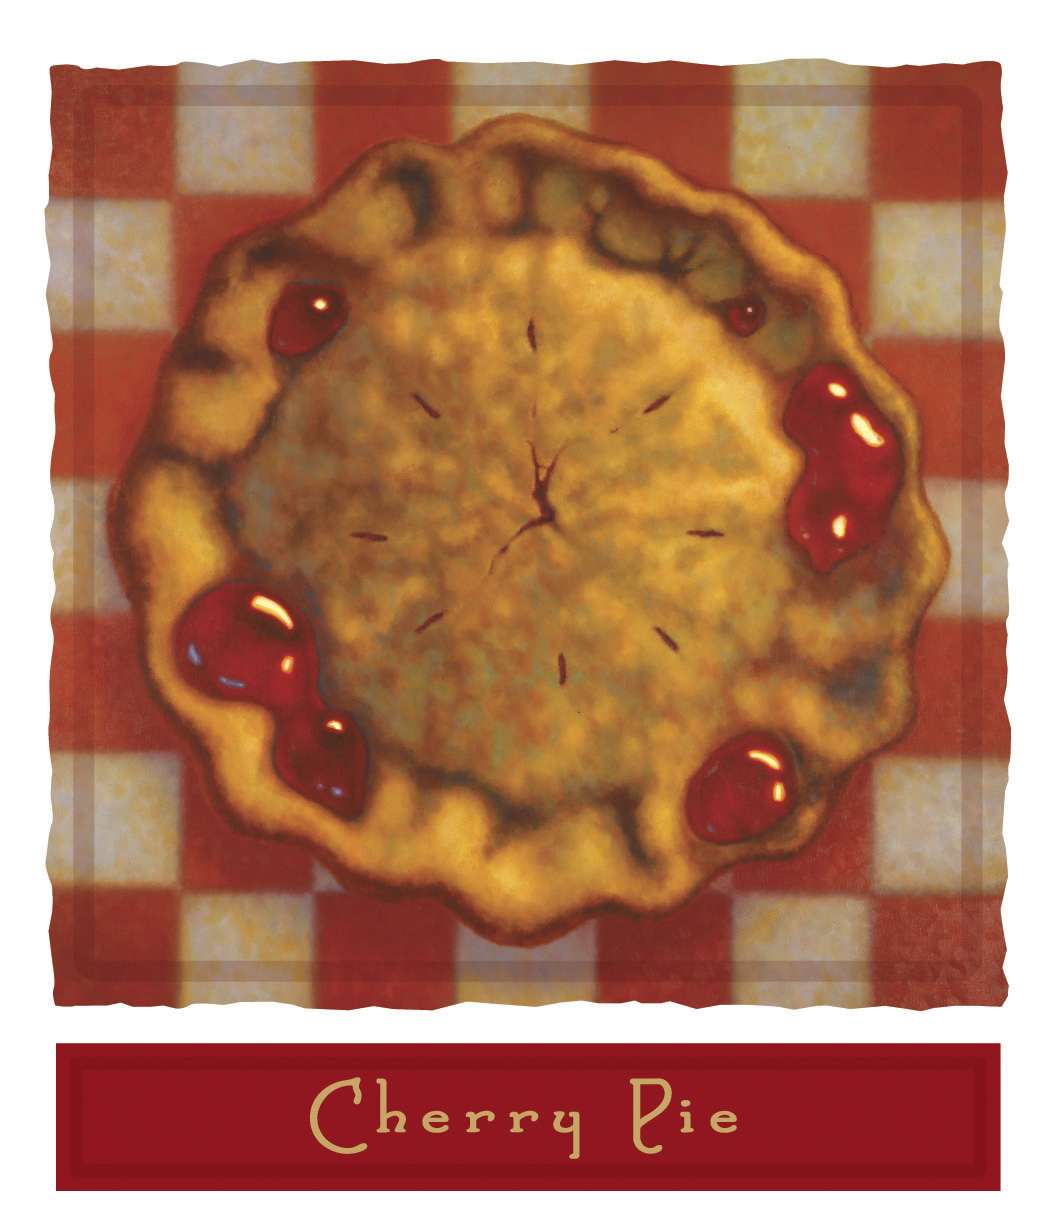 2021 Cherry Pie Pinot Noir San Pablo Bay Vineyard - click image for full description